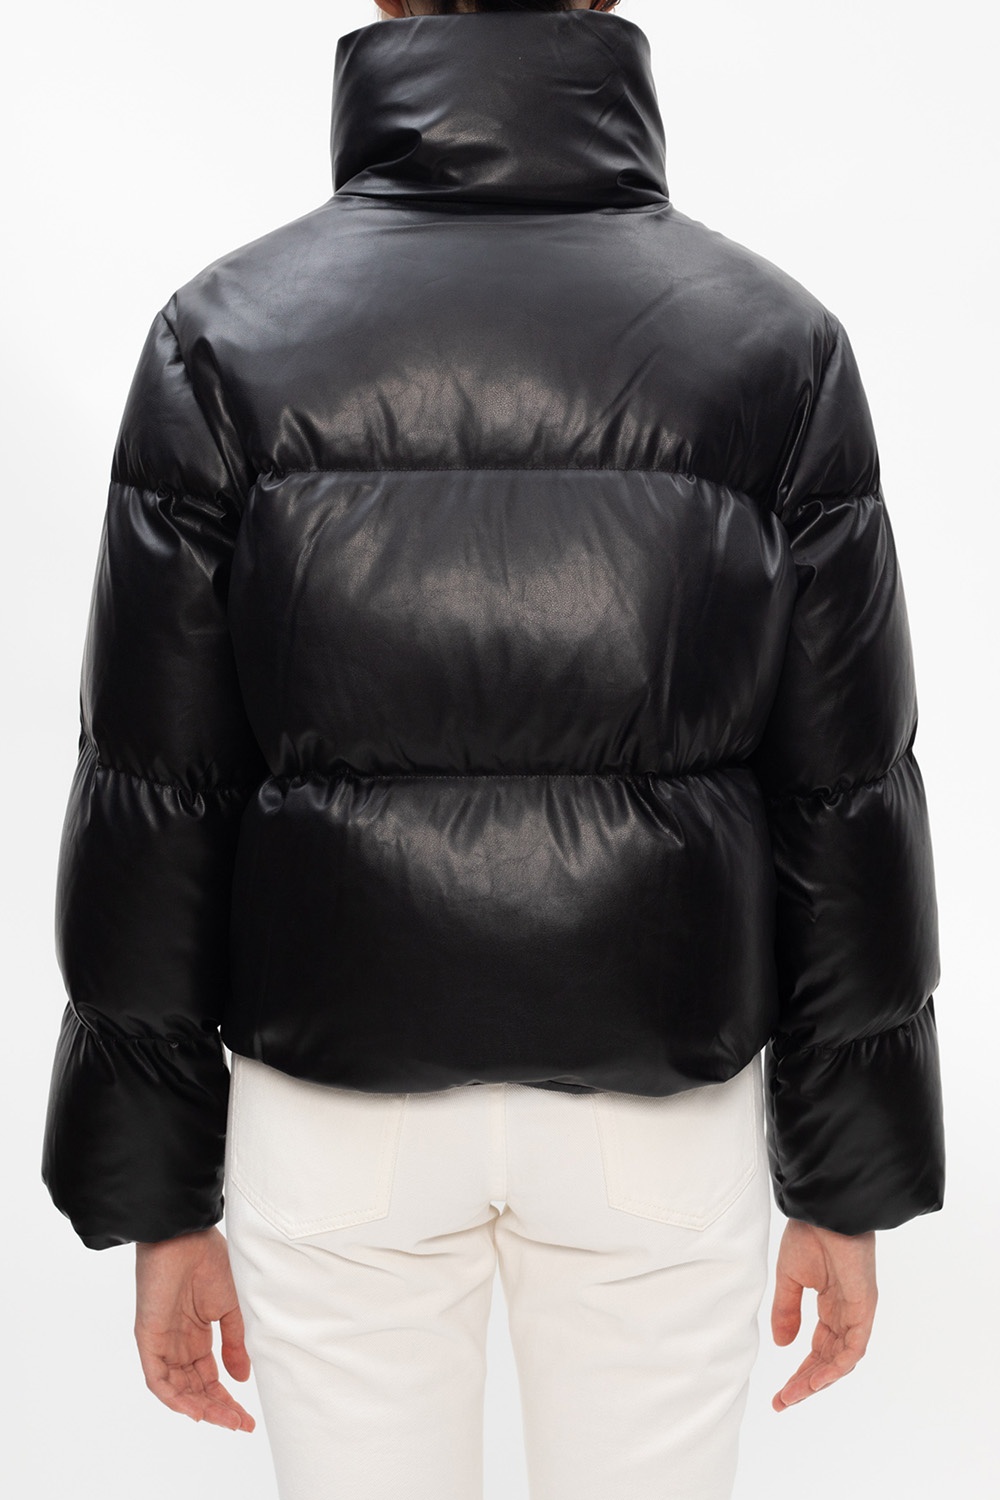 michael kors black quilted jacket